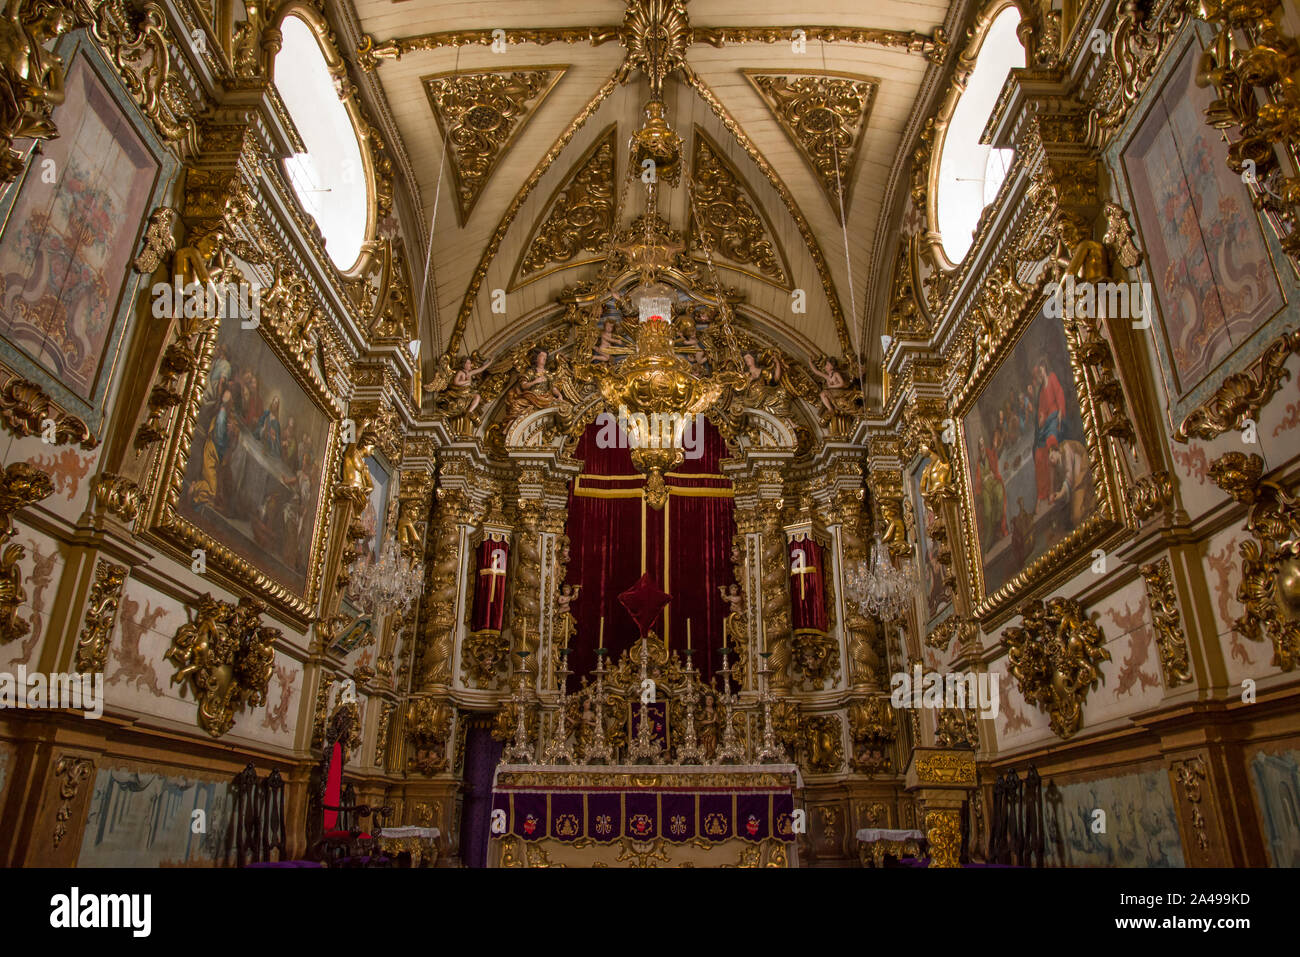 Sao Joao del Rei, Minas Gerais, Brasilien - März 05, 2016: das Innere des Heiligen Franz von Assisi Kirche (Igreja Sao Francisco de Assis) Stockfoto